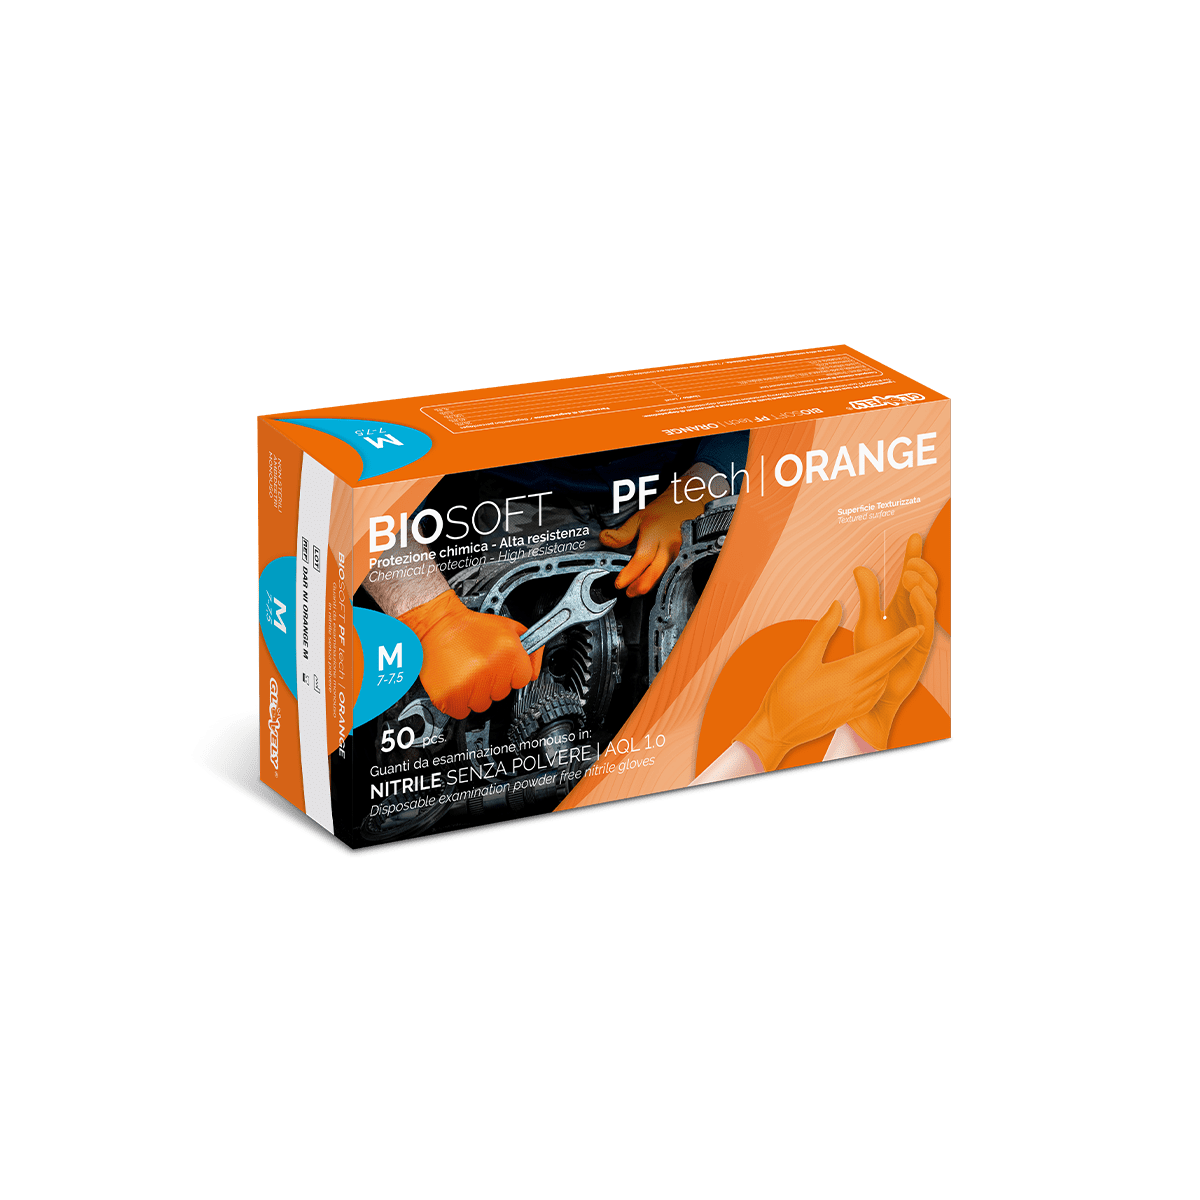 GLOVELY - Biosoft Tech Orange